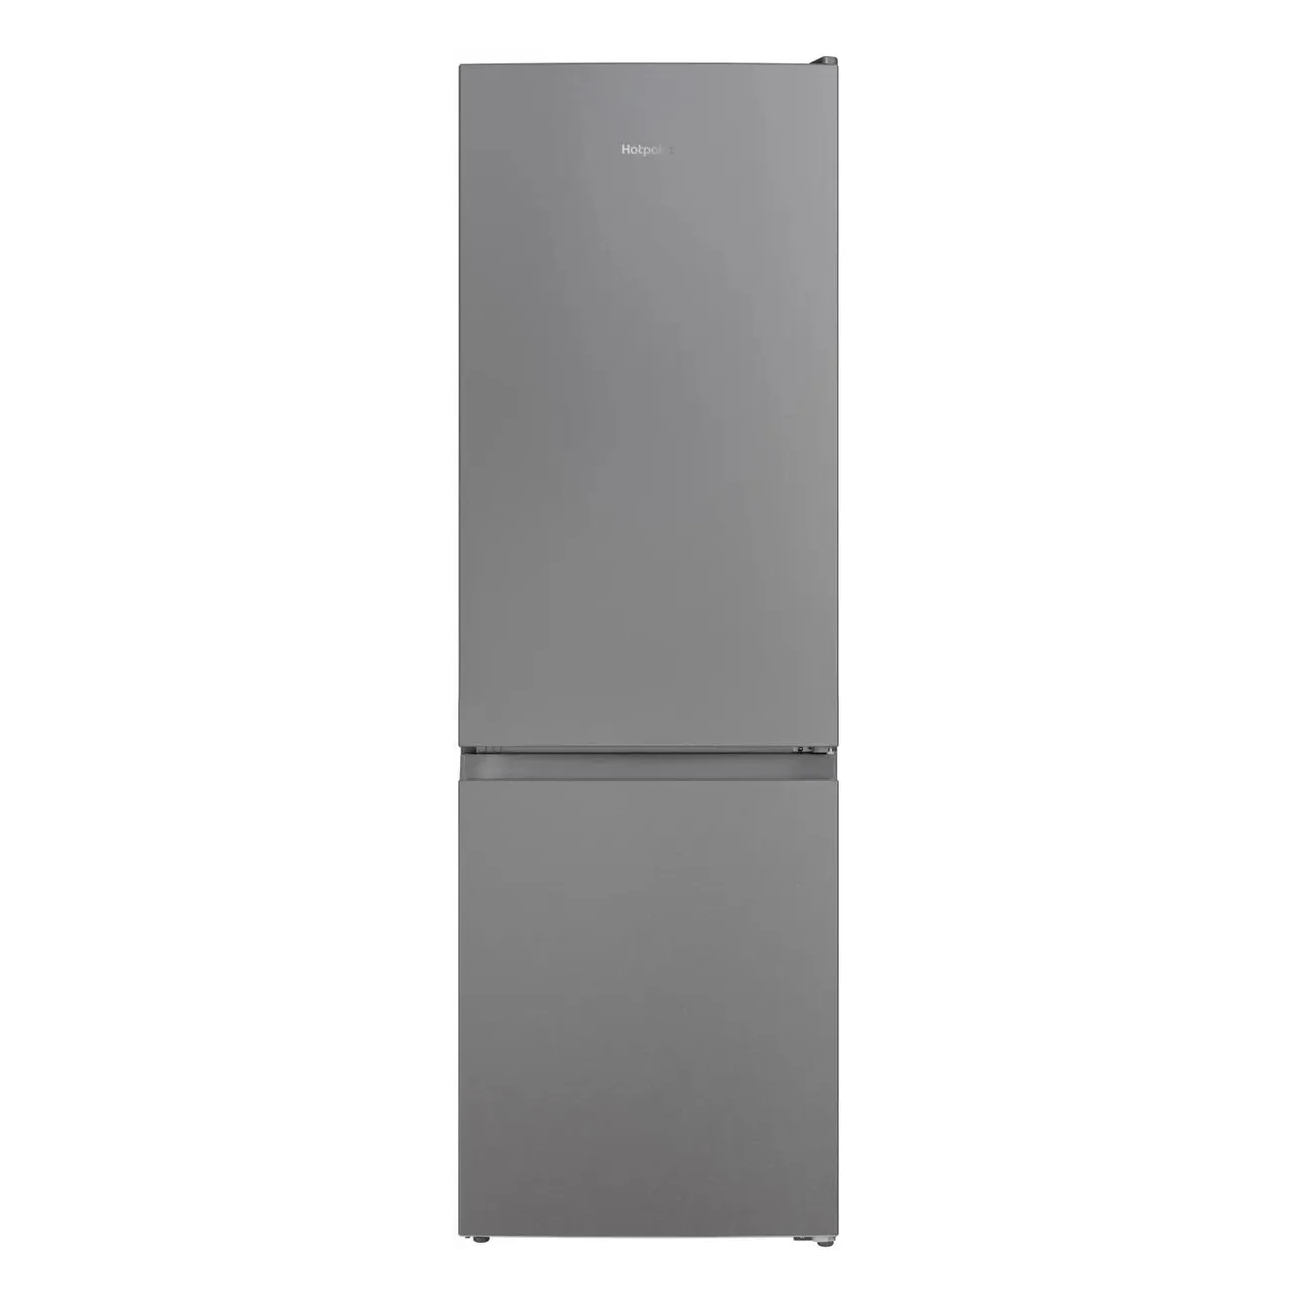 Холодильник HotPoint HT 4180 S серебристый холодильник hotpoint ht 4180 s